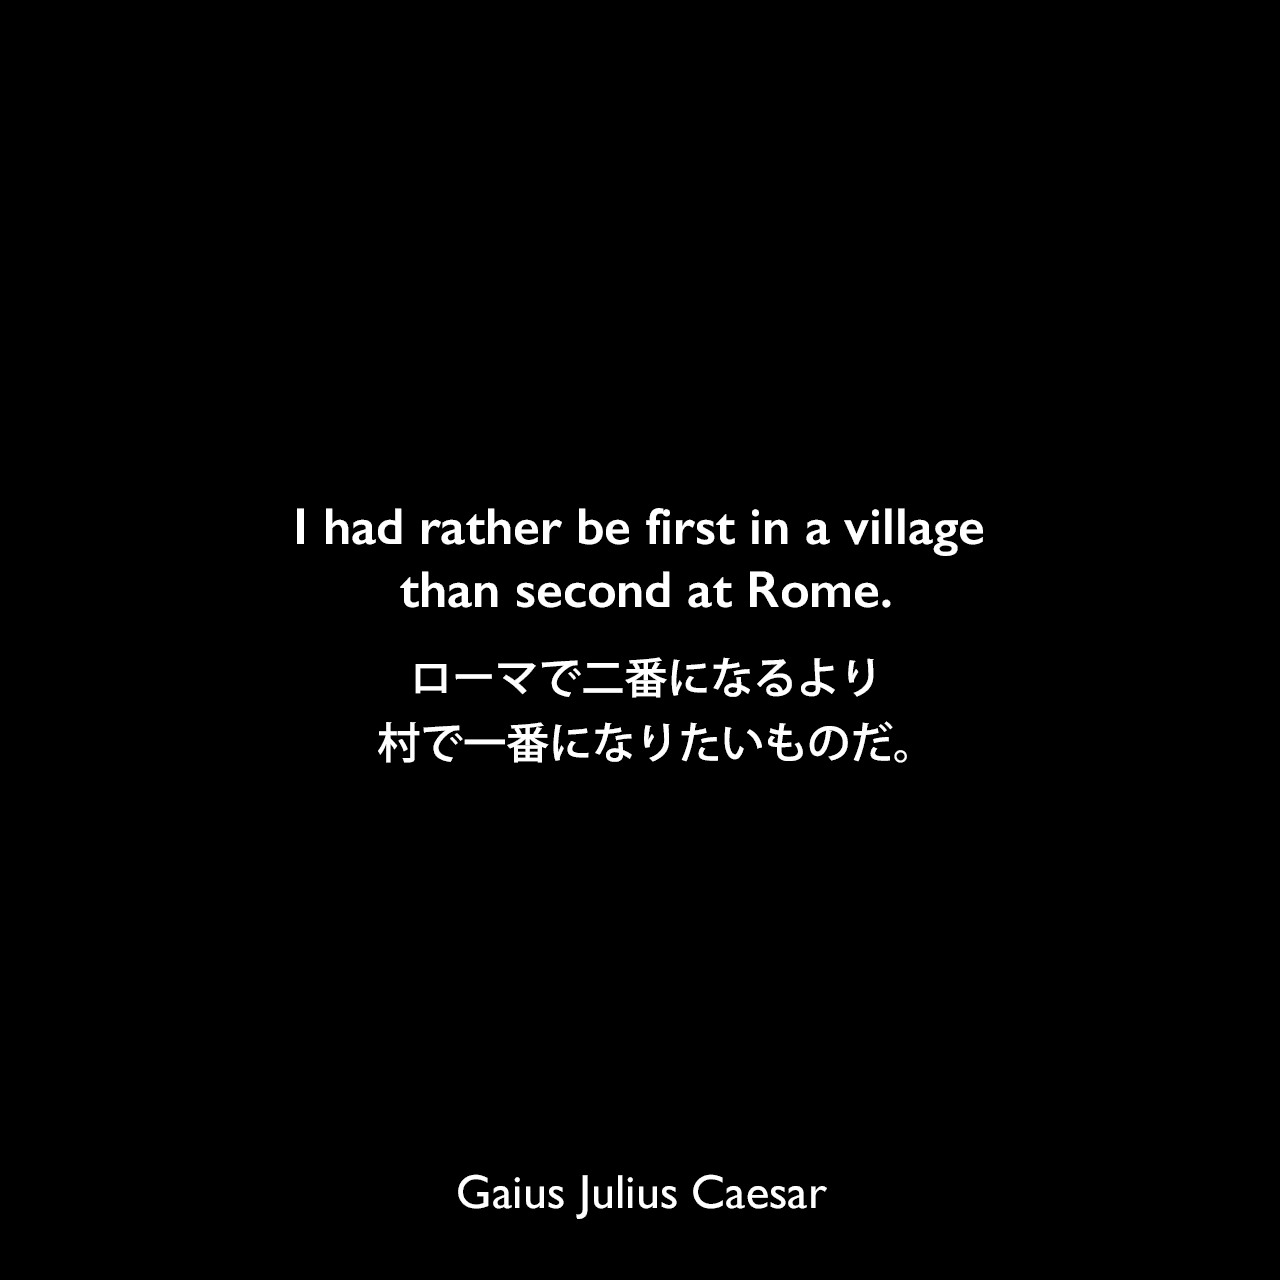 I had rather be first in a village than second at Rome.ローマで二番になるより、村で一番になりたいものだ。Gaius Julius Caesar